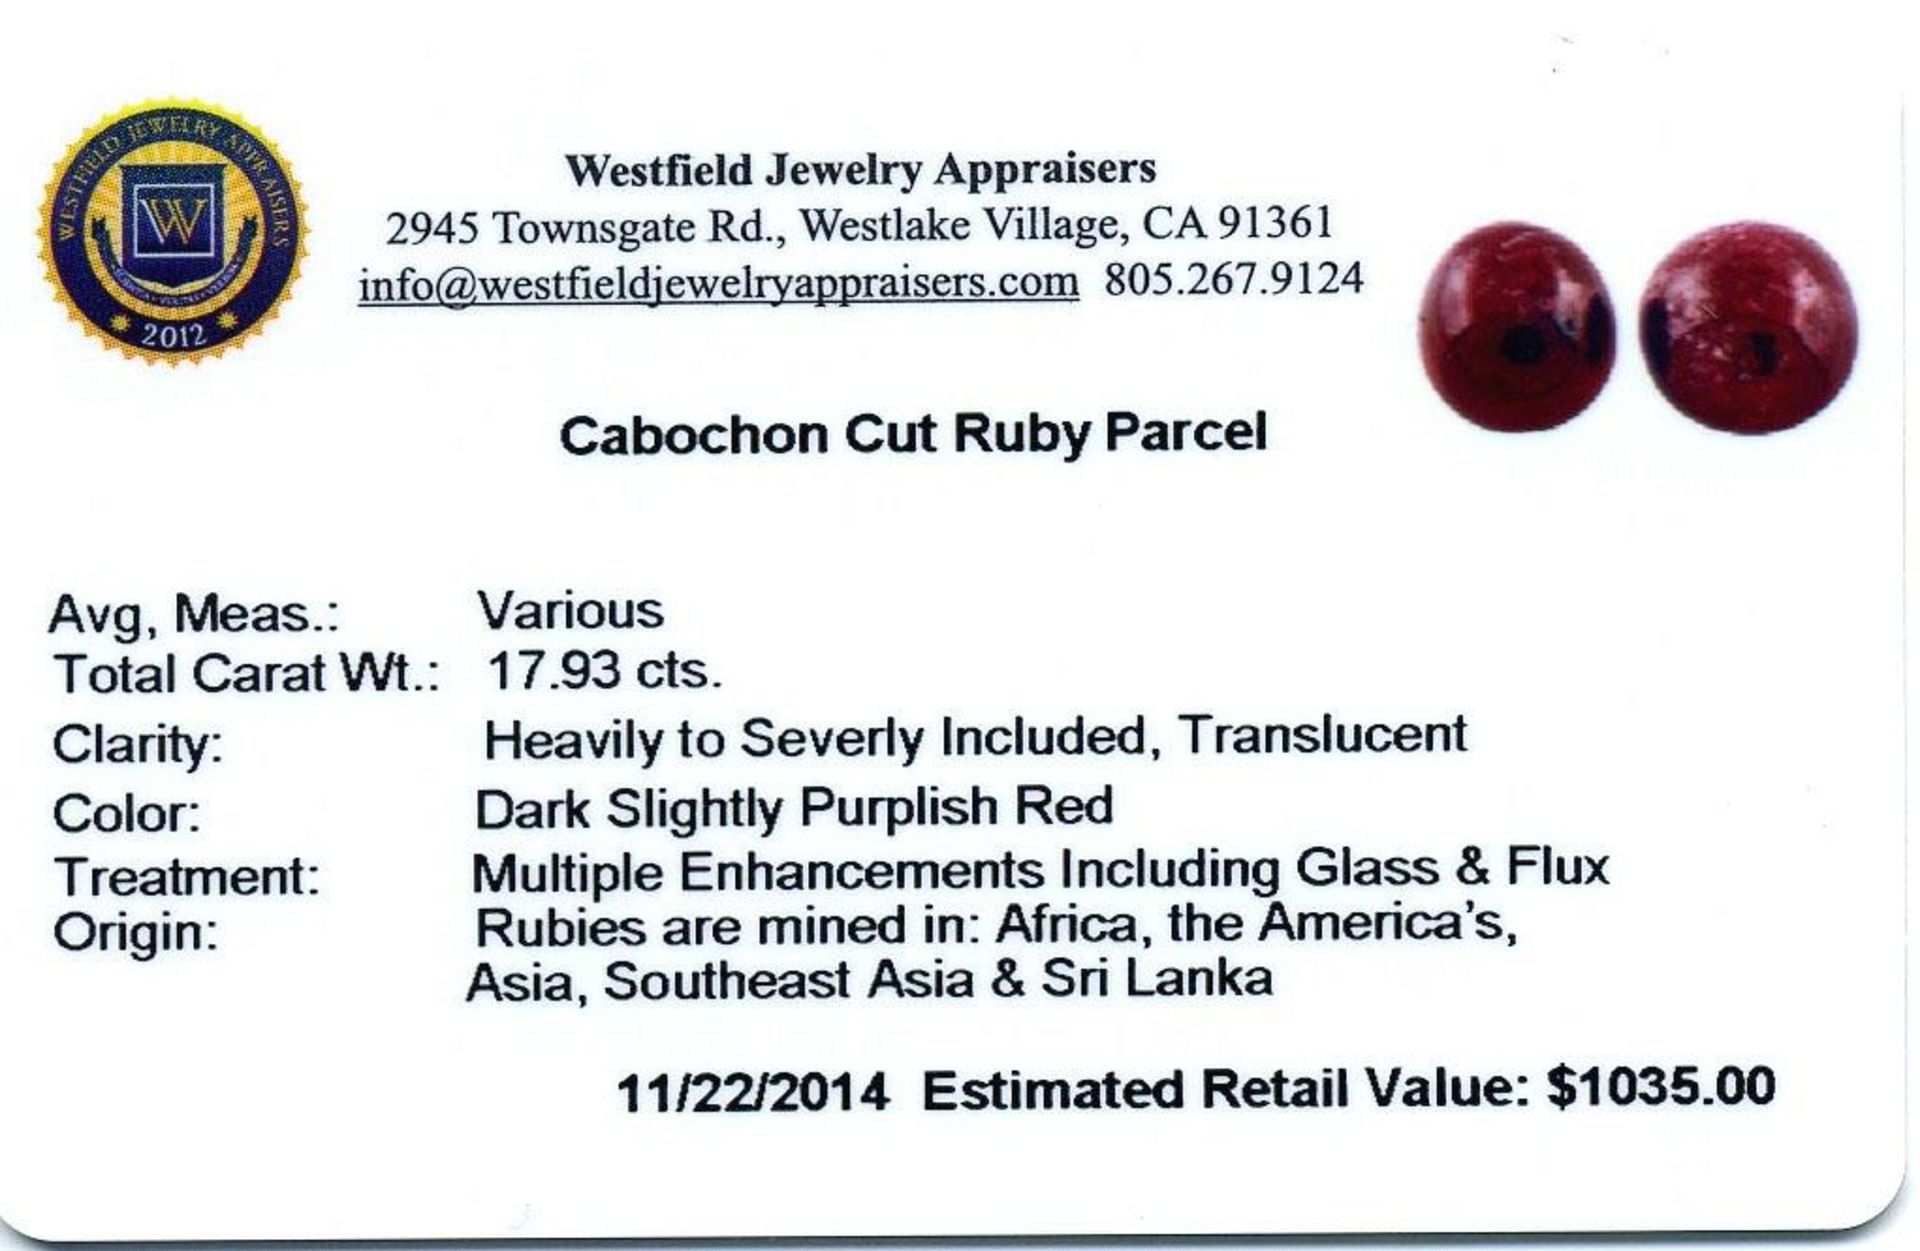 17.93 ctw. Cabochon Cut Ruby Parcel - Image 2 of 2